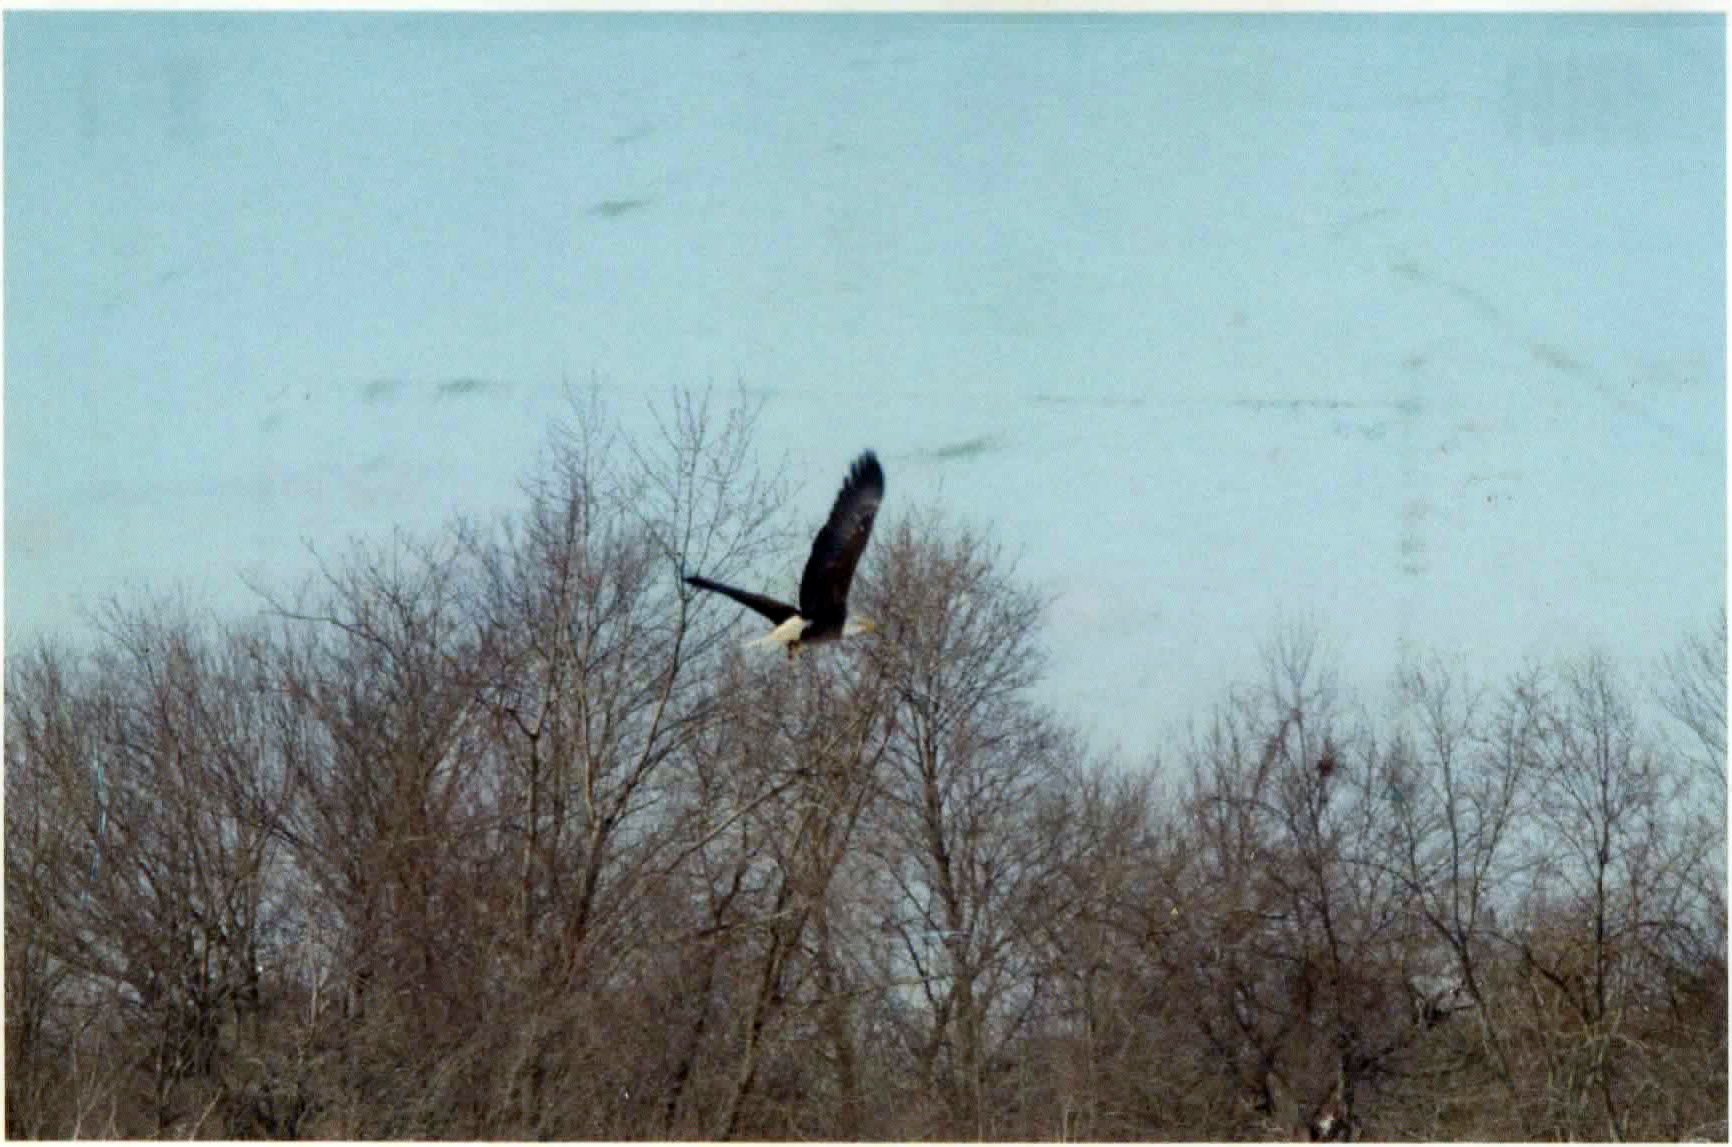 Bald eagle flies over trees in winter